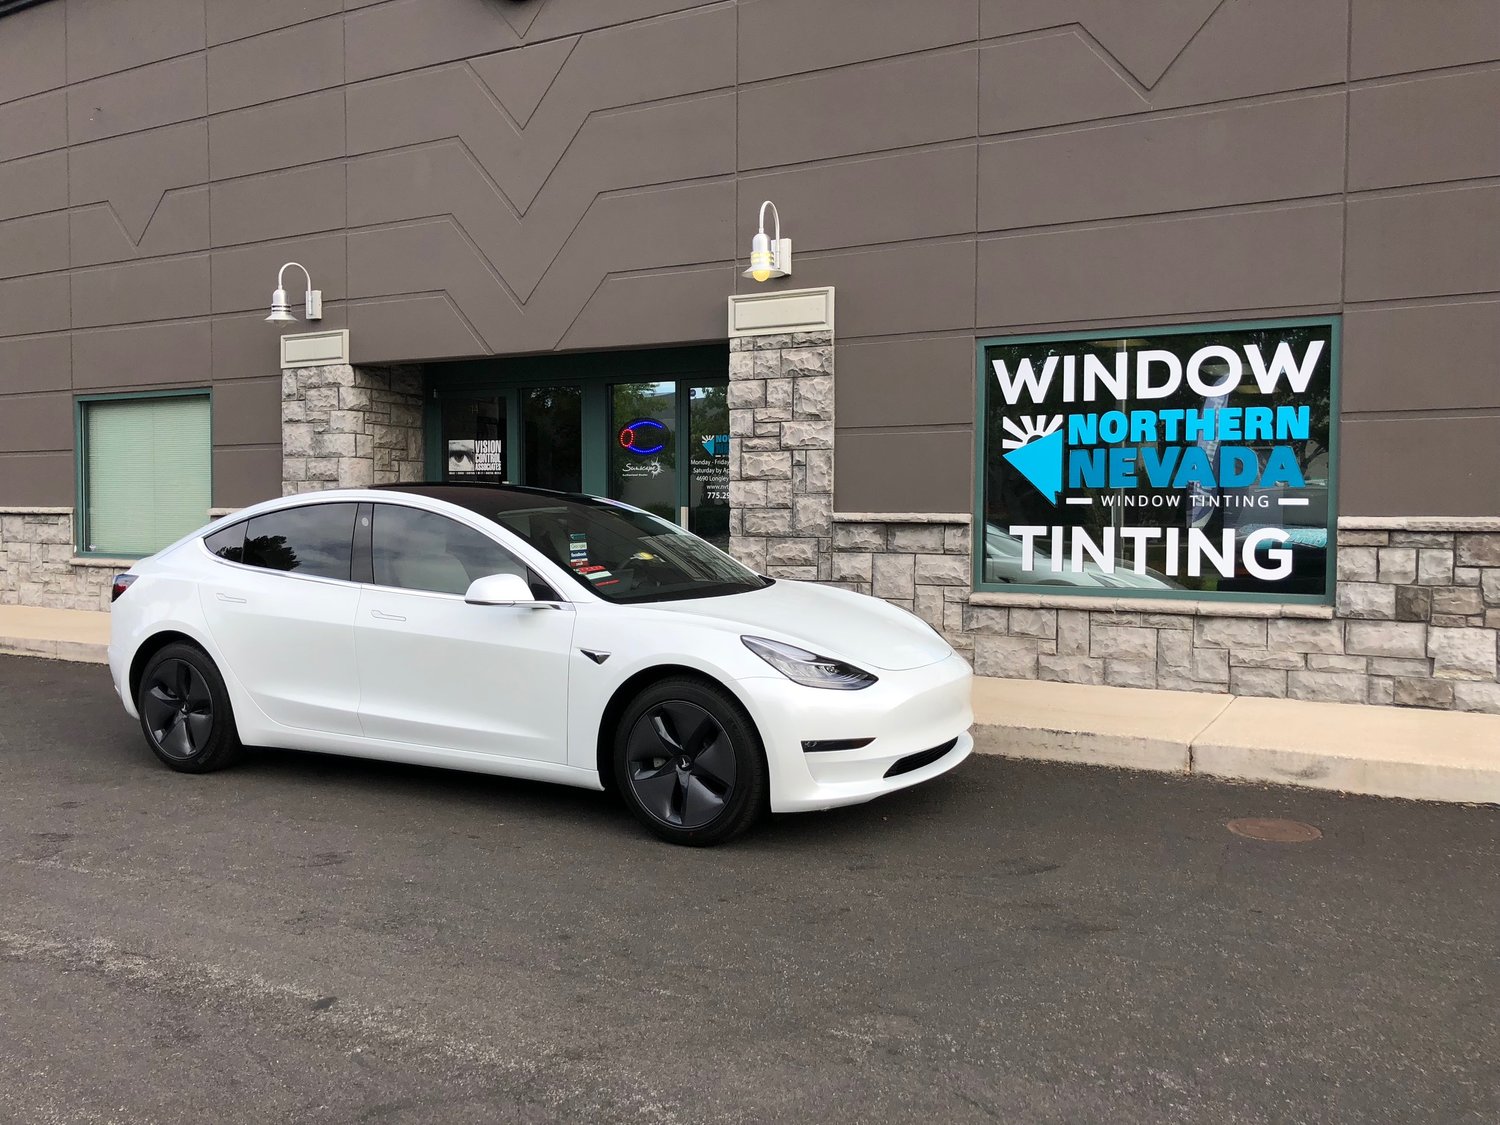 Car Window Tinting for sale in Reno, Nevada